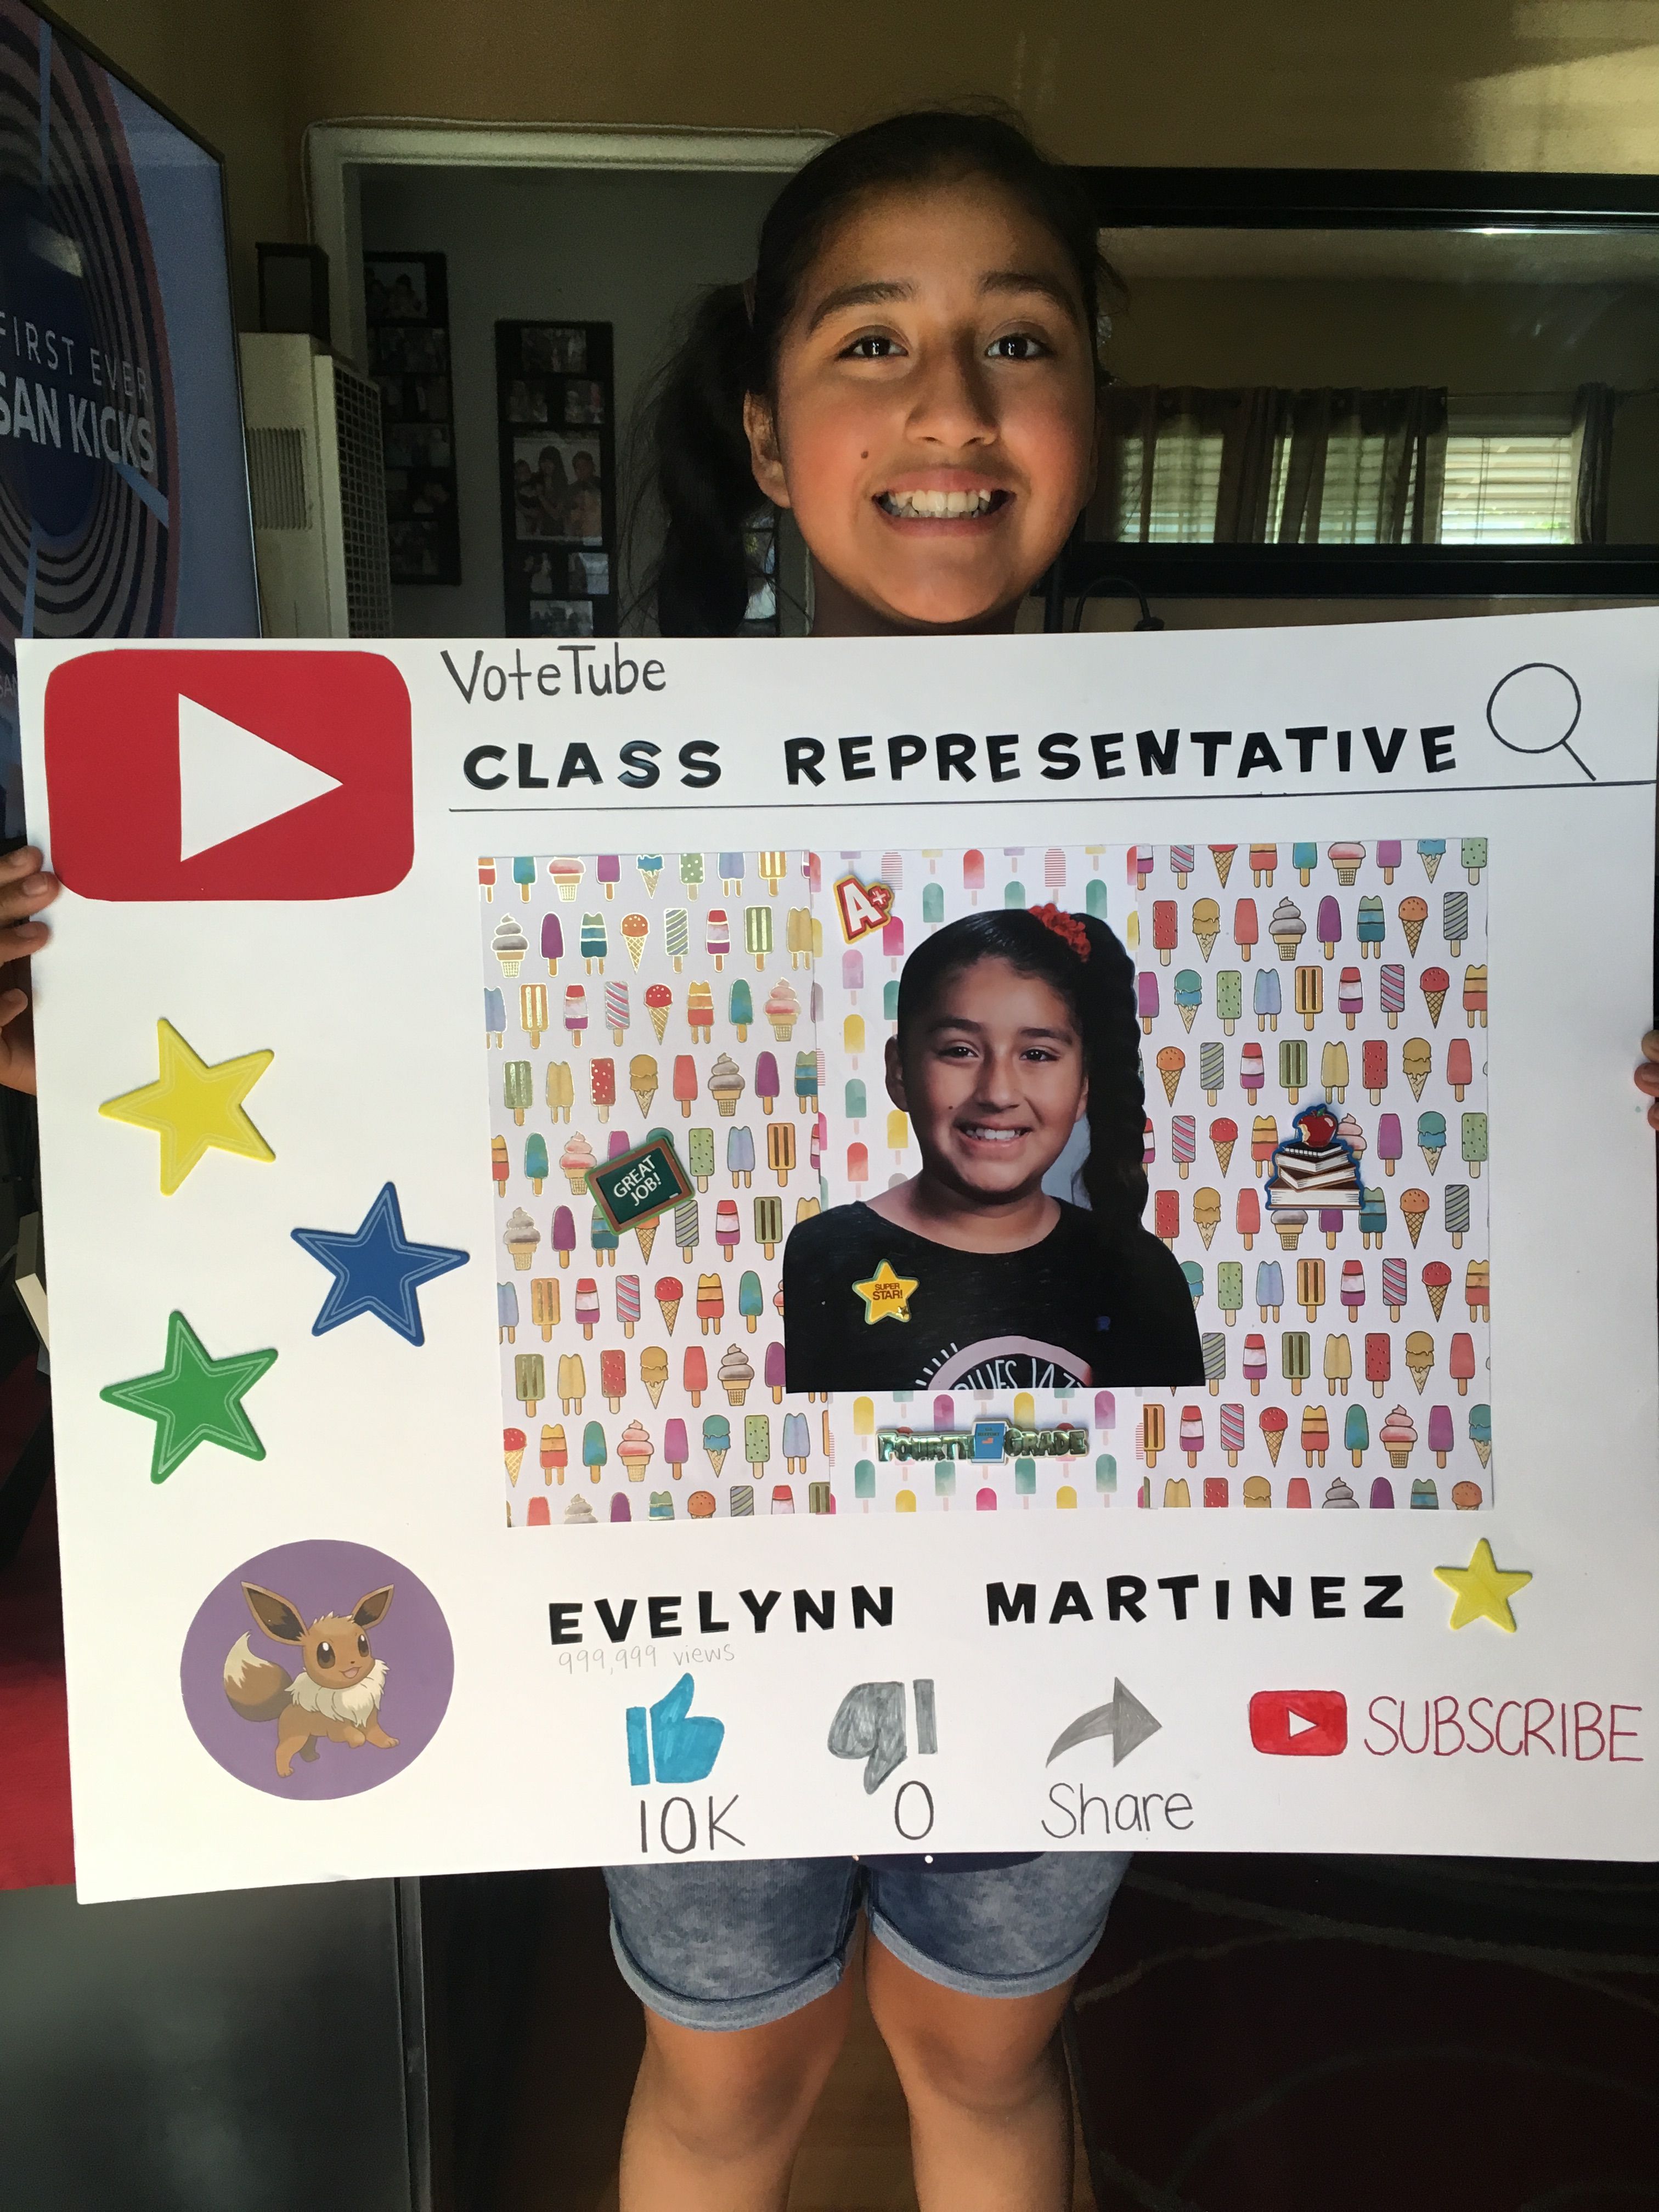 class representative poster ideas